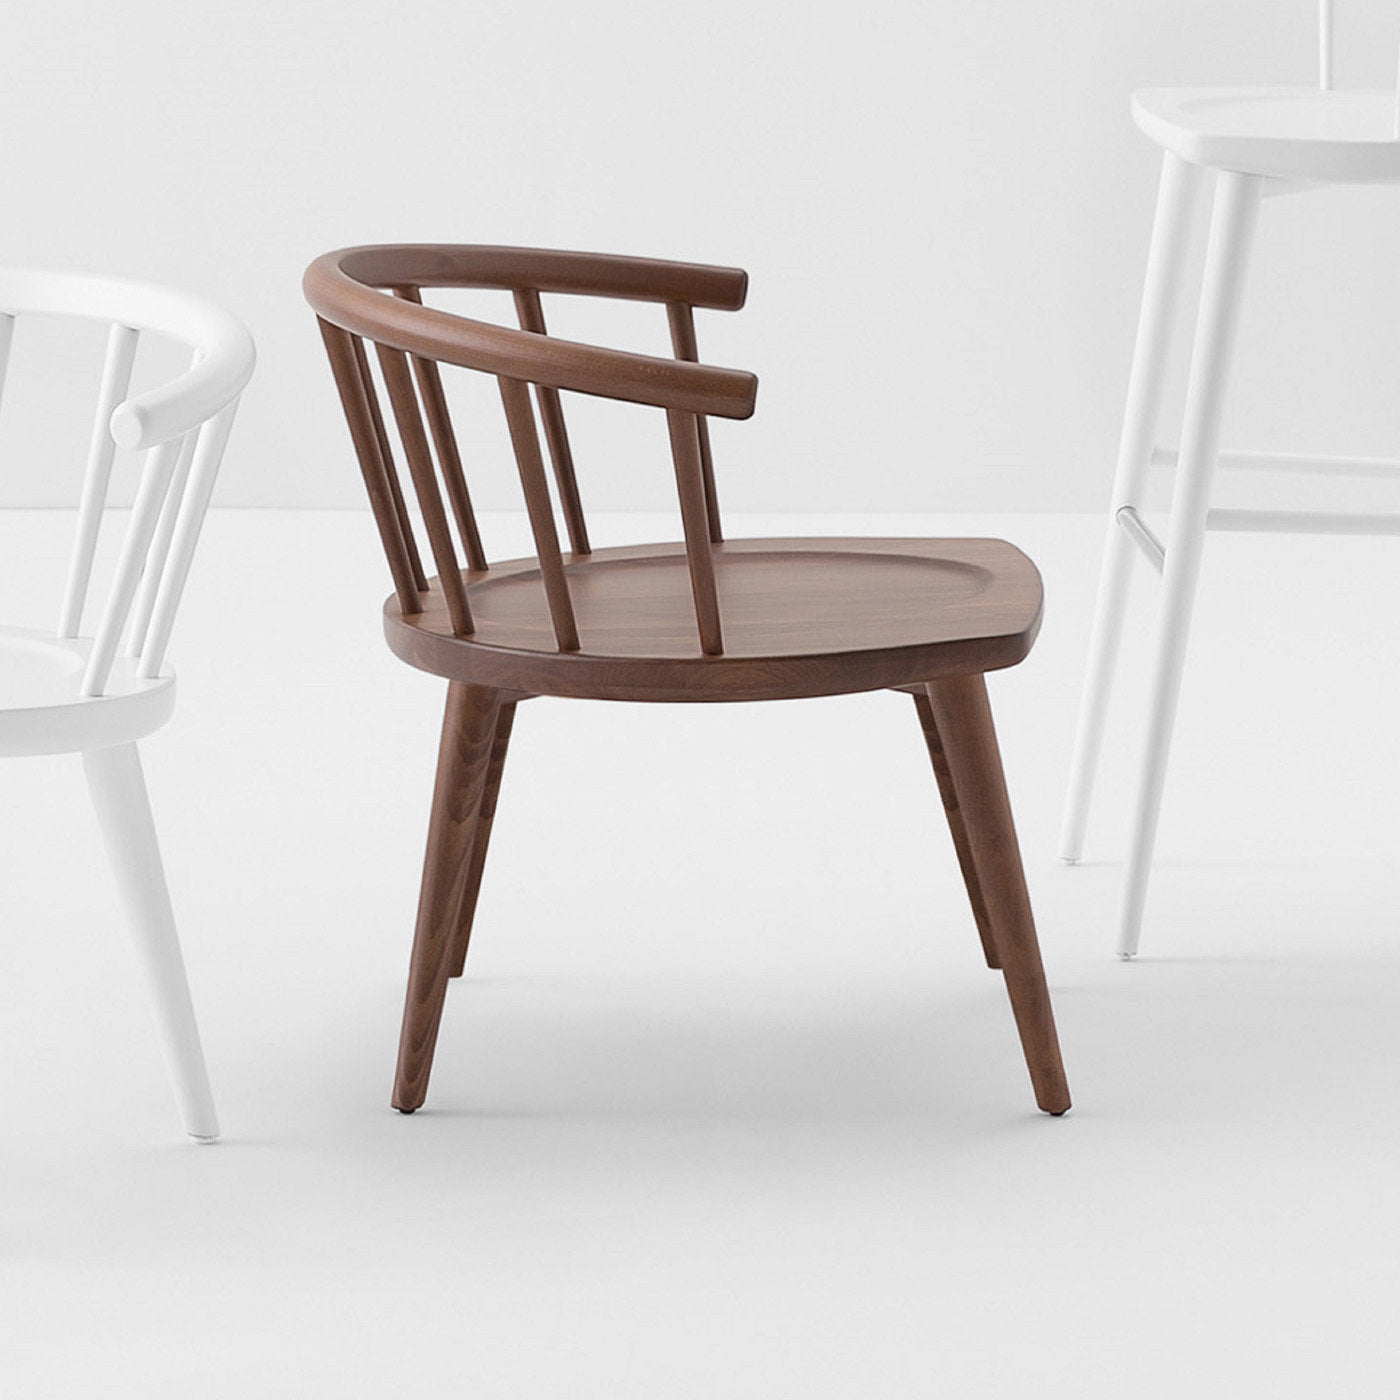 W. Lounge Chair by Fabrizio Gallinaro  - Alternative view 1